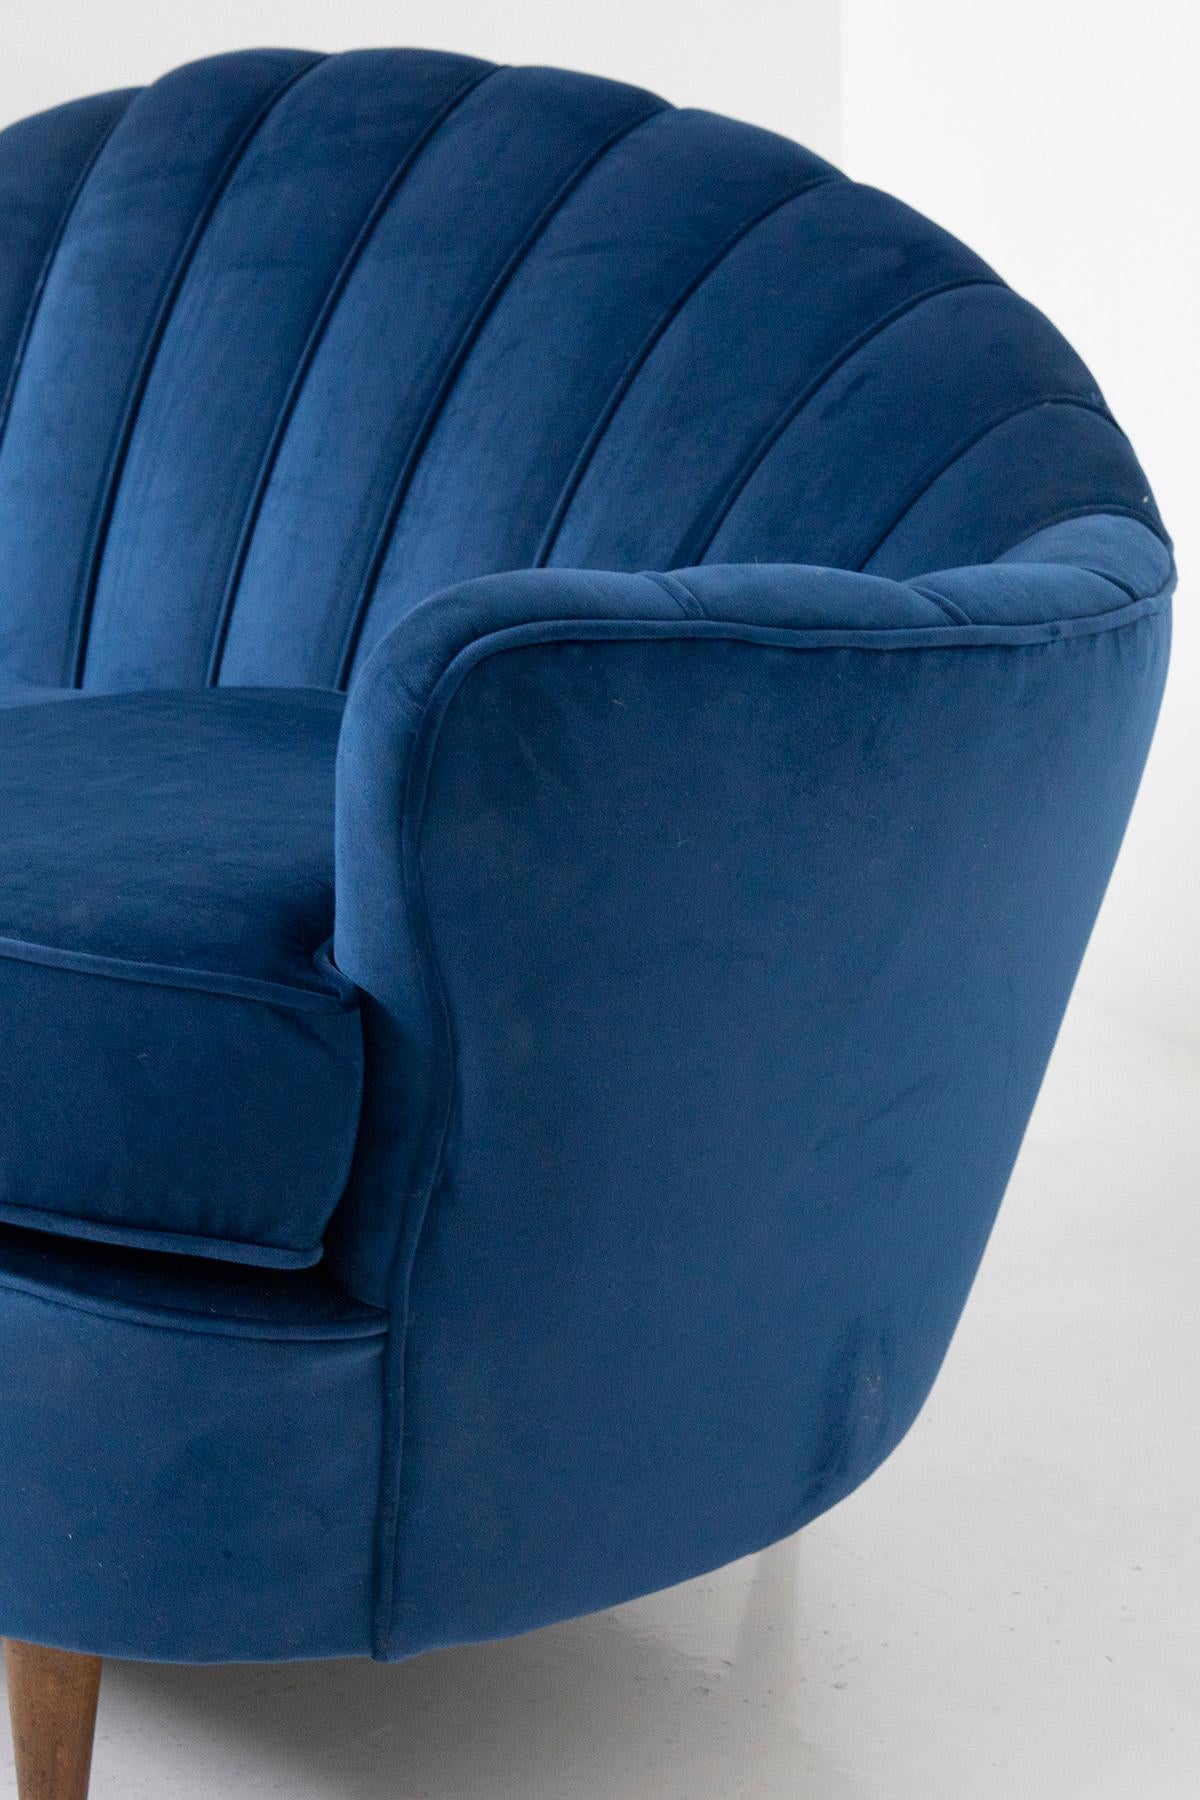 Mid-20th Century Beautiful Italian Shell Sofa in Blue Velvet